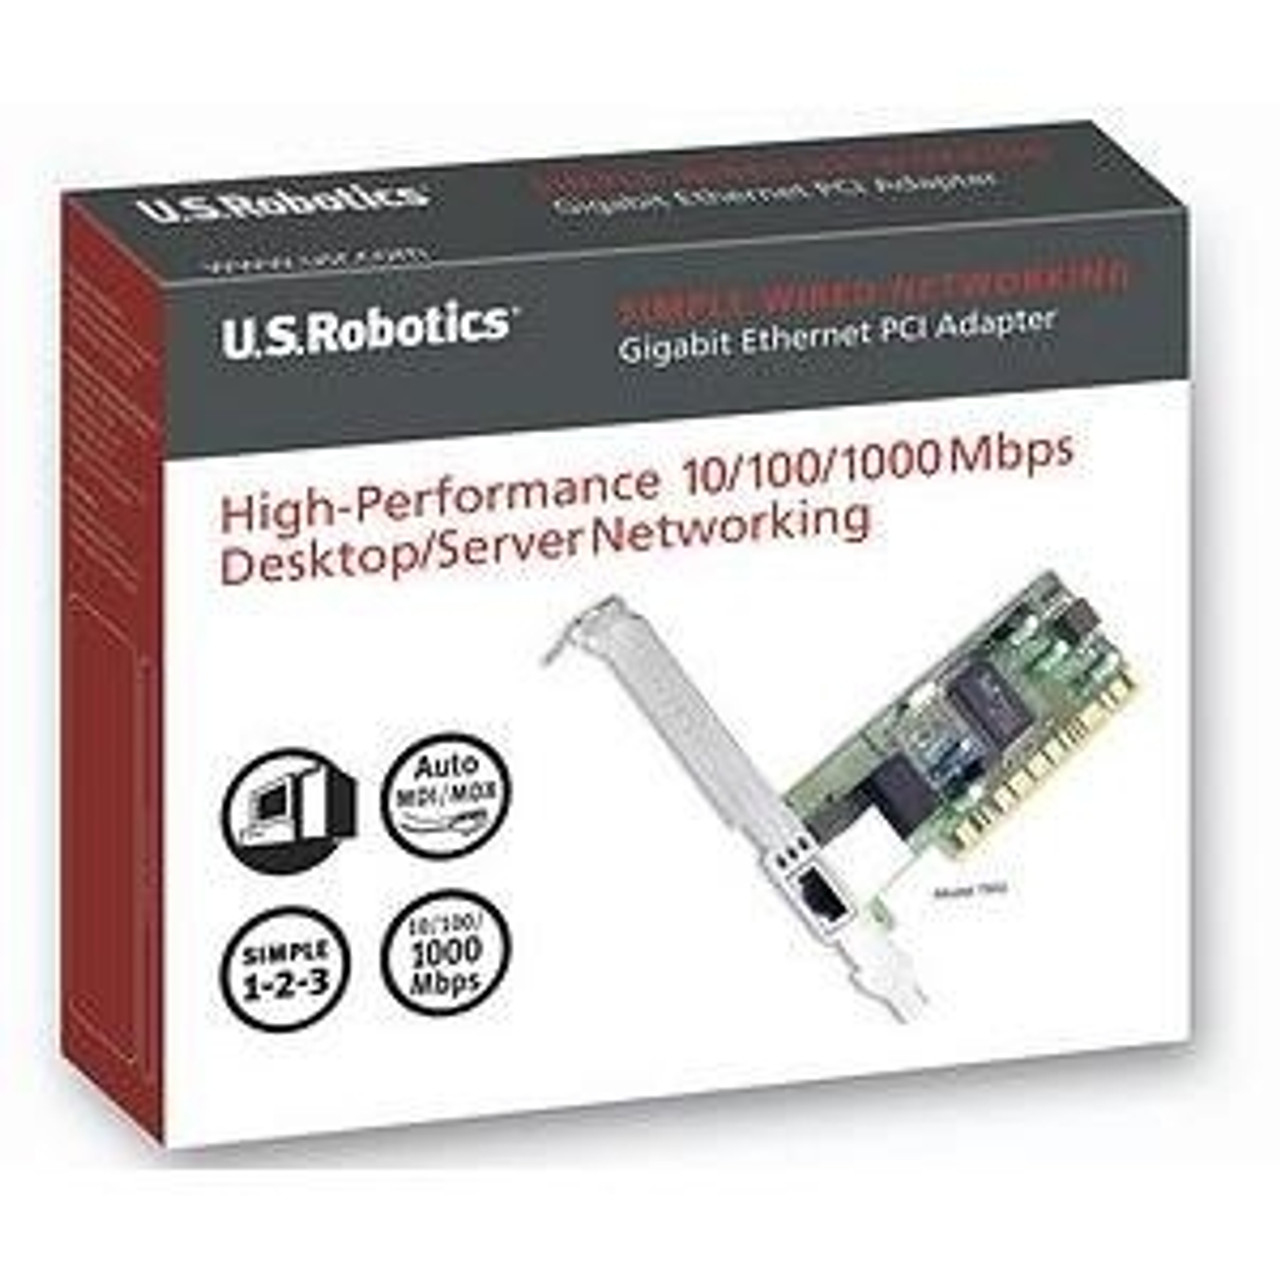 USR997902 U.S. Robotics Gigabit Ethernet PCI Card